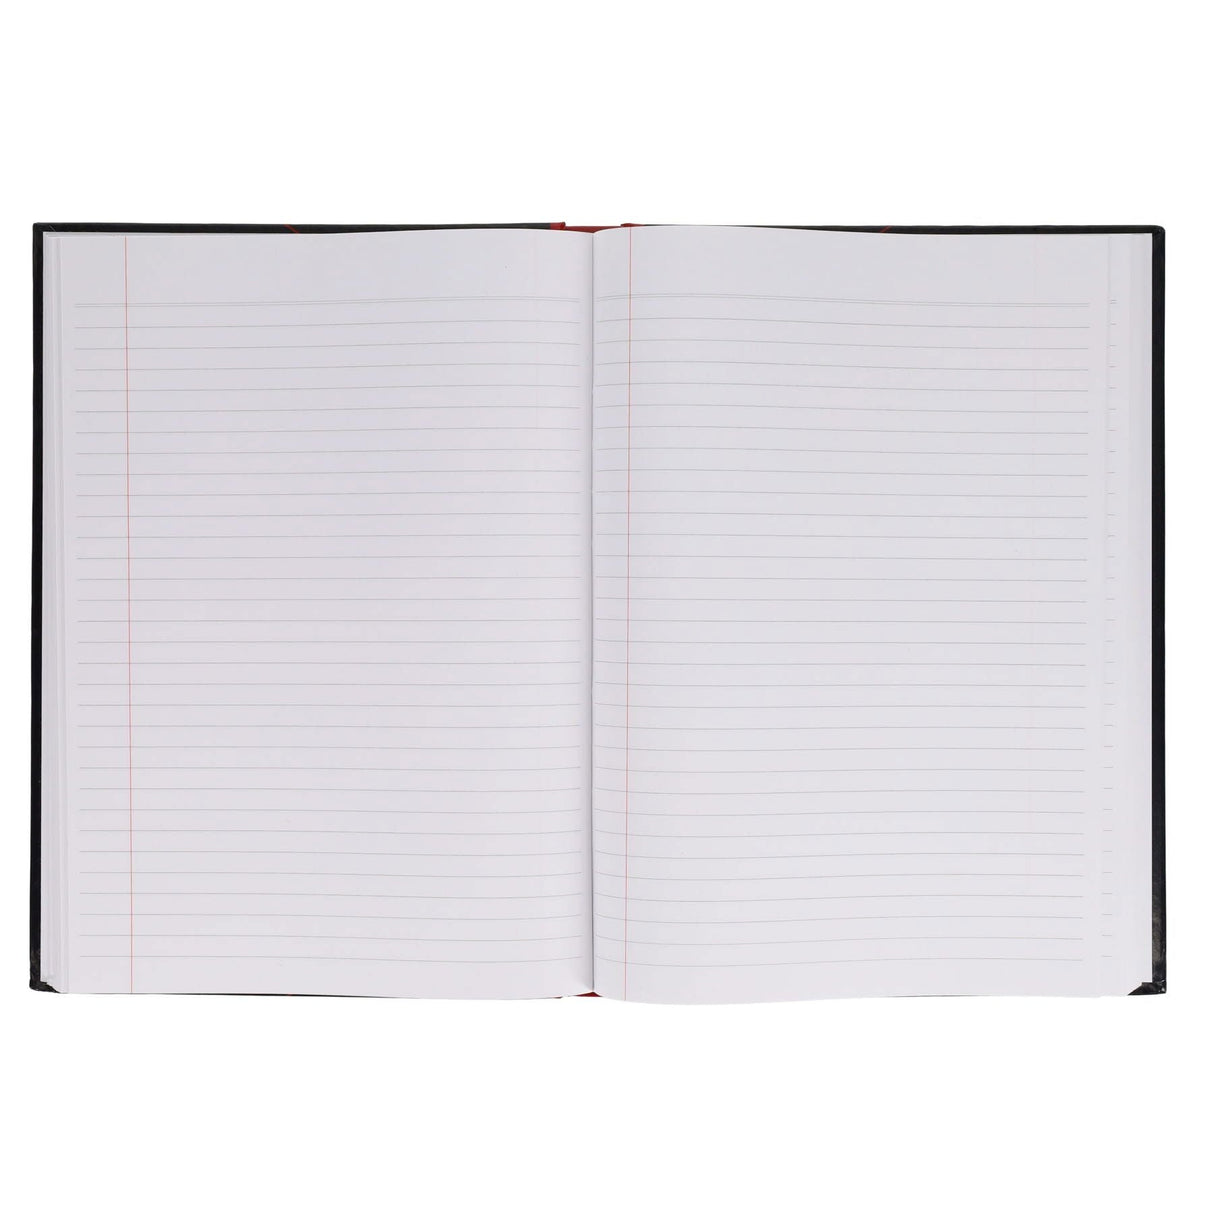 Premier A4 Hardcover Notebook - 80gsm - Red & Black - 384 Pages-A4 Notebooks-Premier|StationeryShop.co.uk